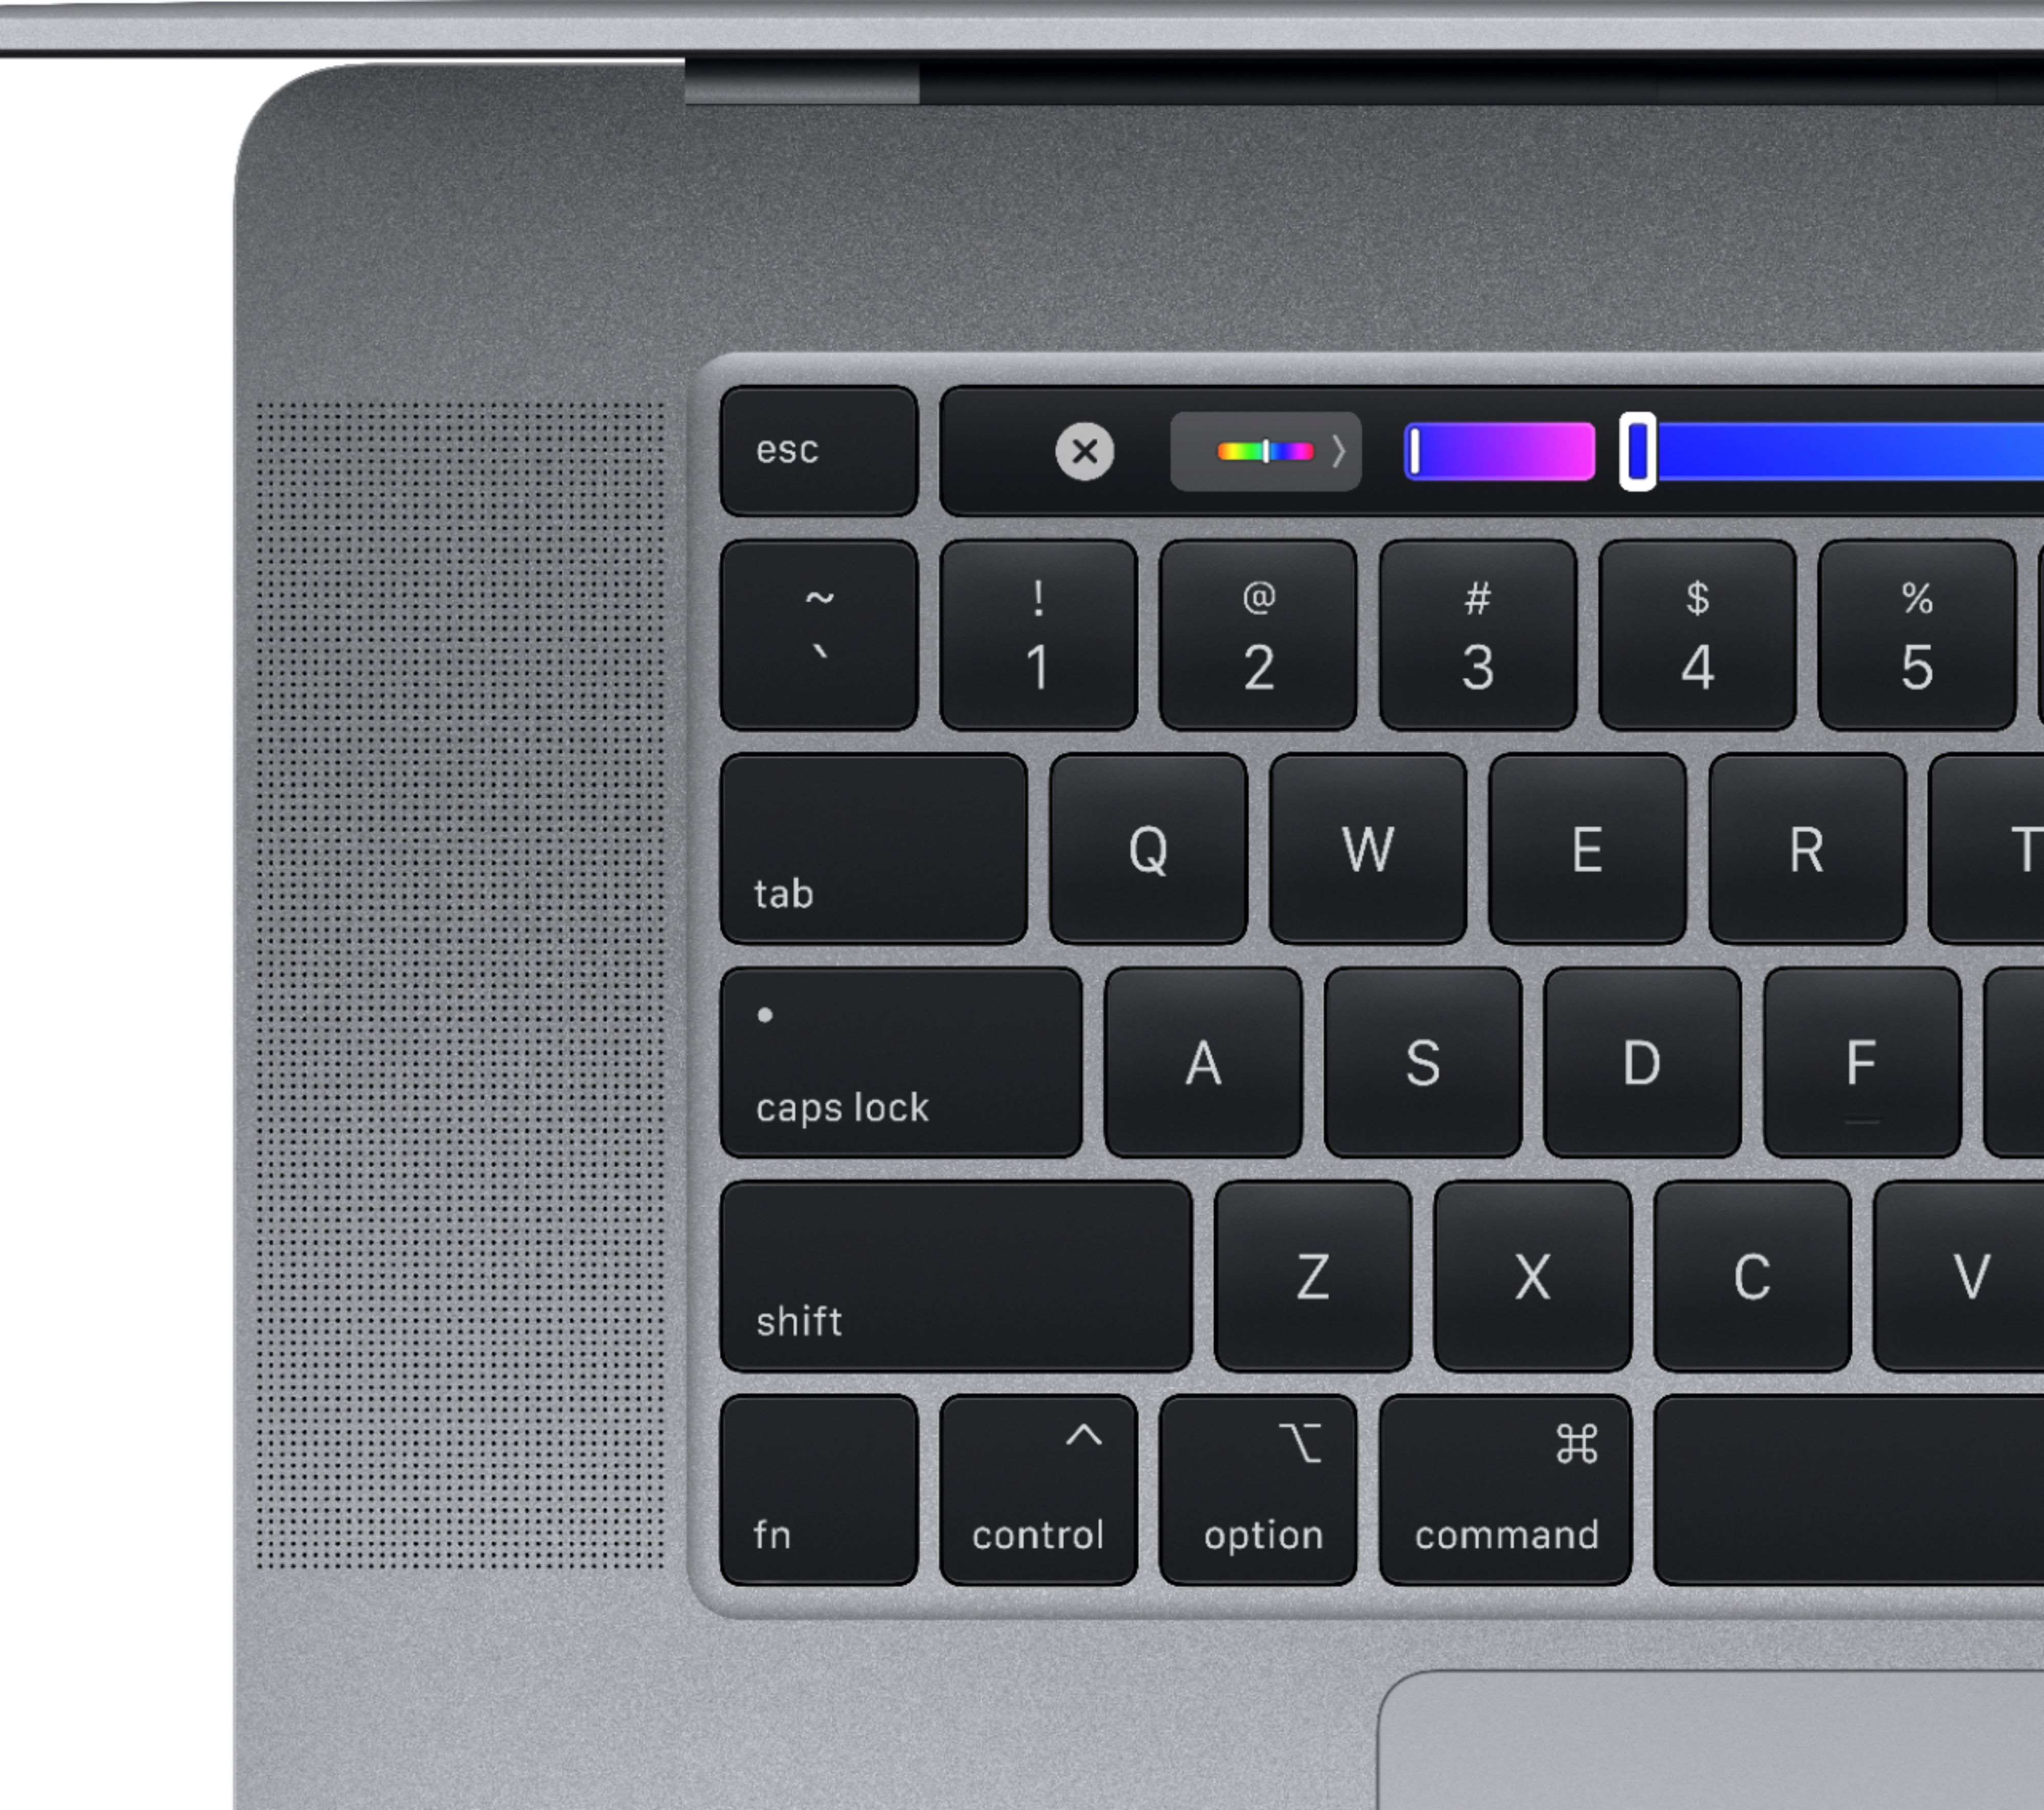 sturen Stationair bouwen Best Buy: Apple MacBook Pro 16" Display with Touch Bar Intel Core i9 16GB  Memory AMD Radeon Pro 5500M 1TB SSD Space Gray MVVK2LL/A